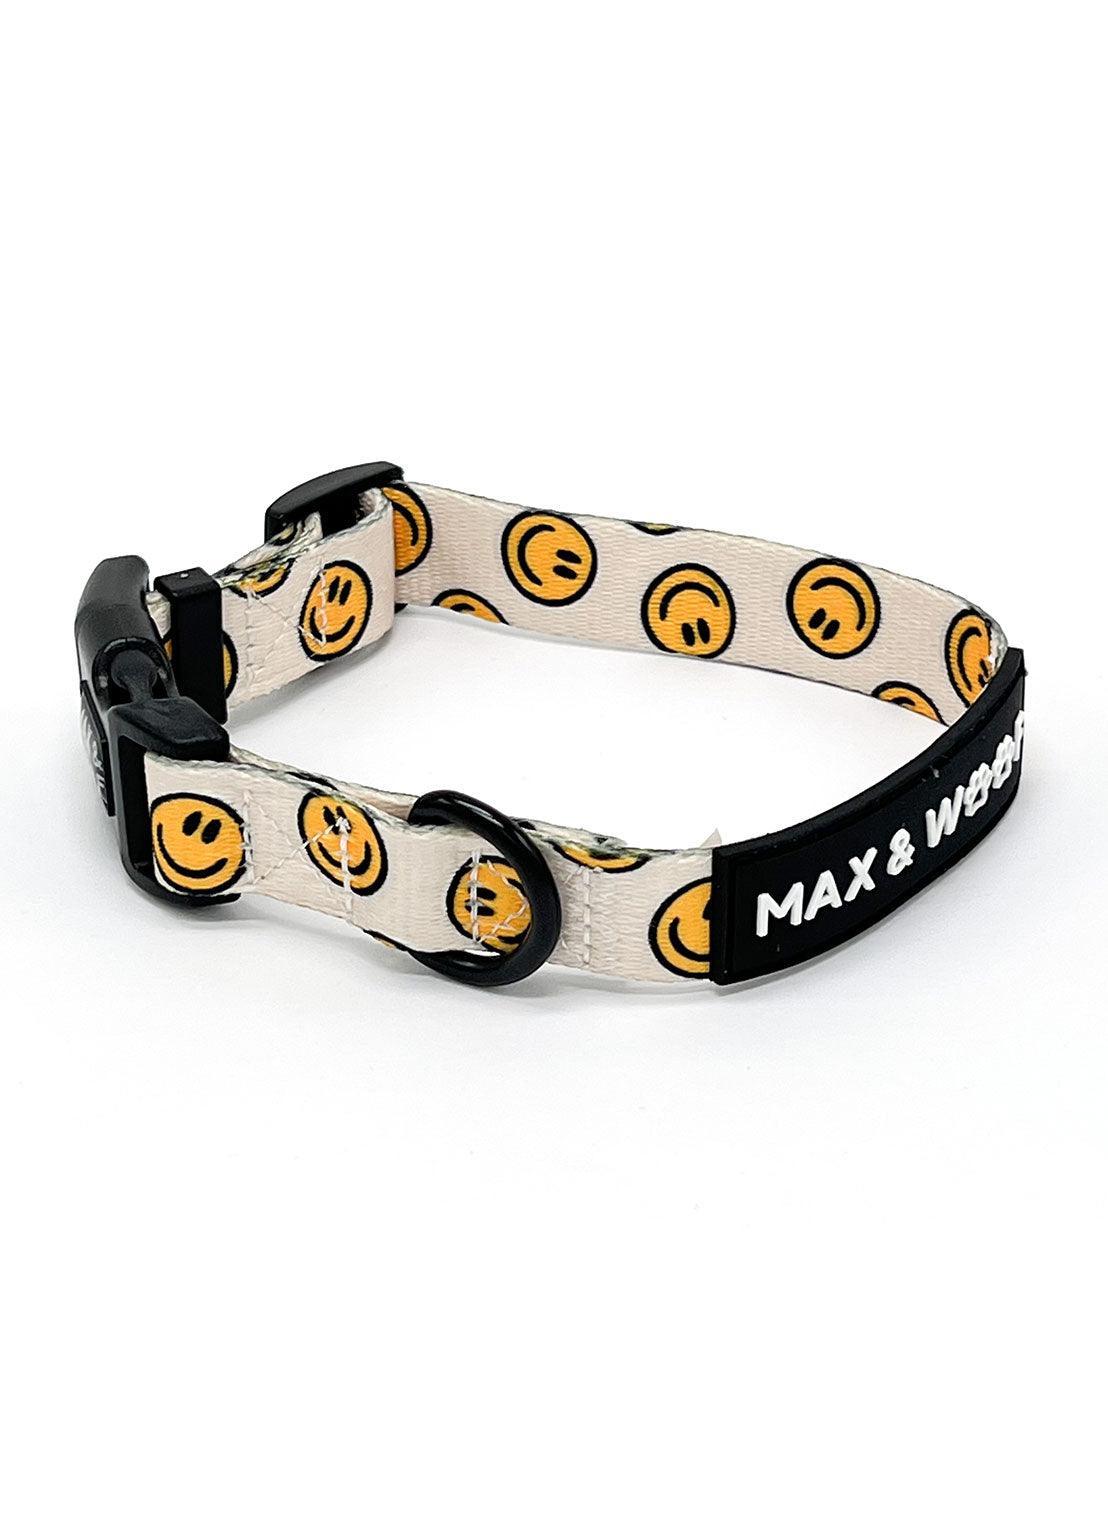 Keep Smiling halsband - Max & Woof - boetiek, halsbanden, laatste stuks, maxandwoof, Outfit voor je hond, sale, Vrolijke honden halsband - By Marley